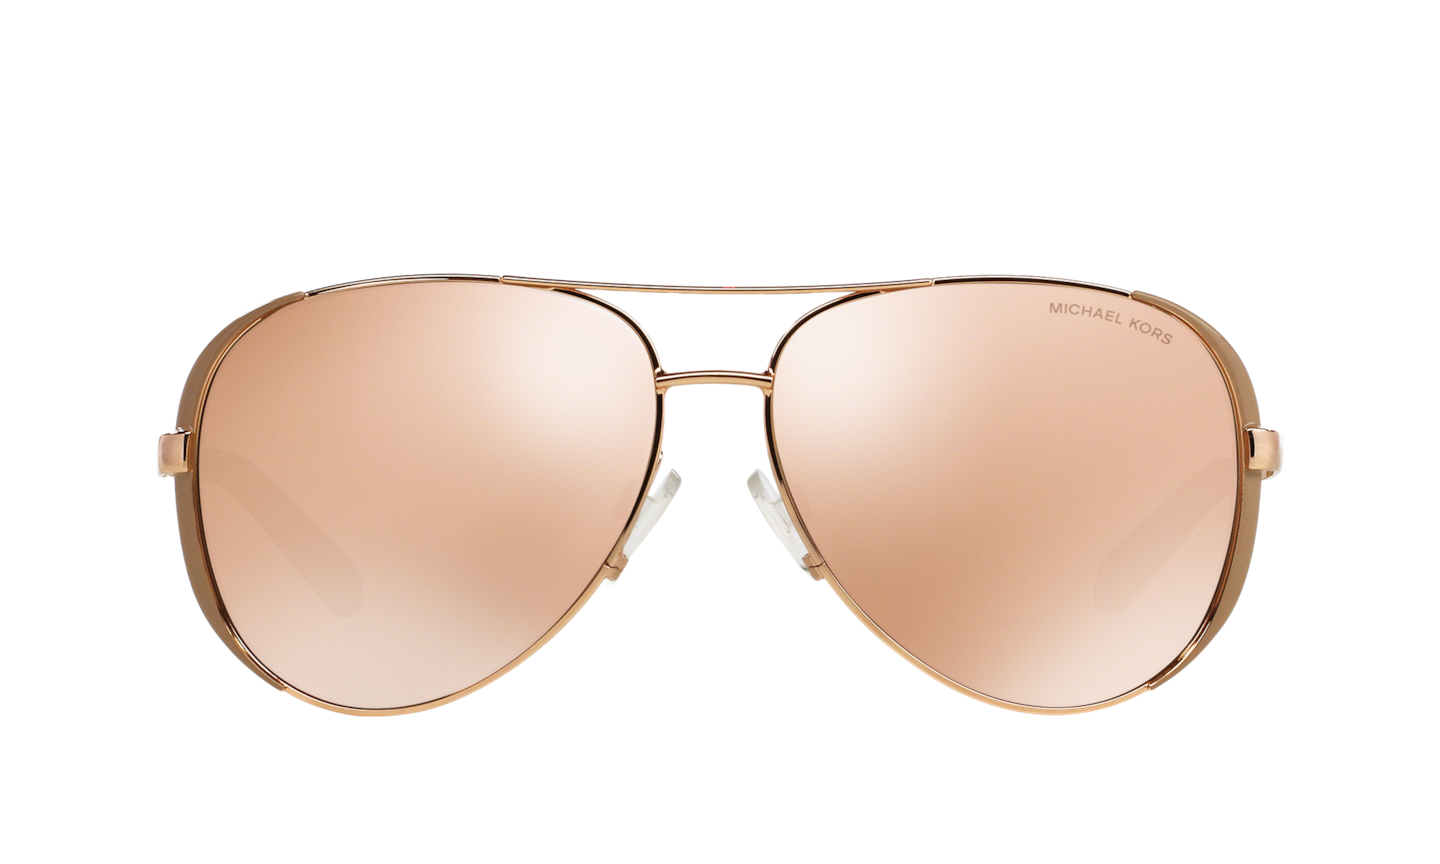 Michael Kors MK5004 Chelsea Sunglasses